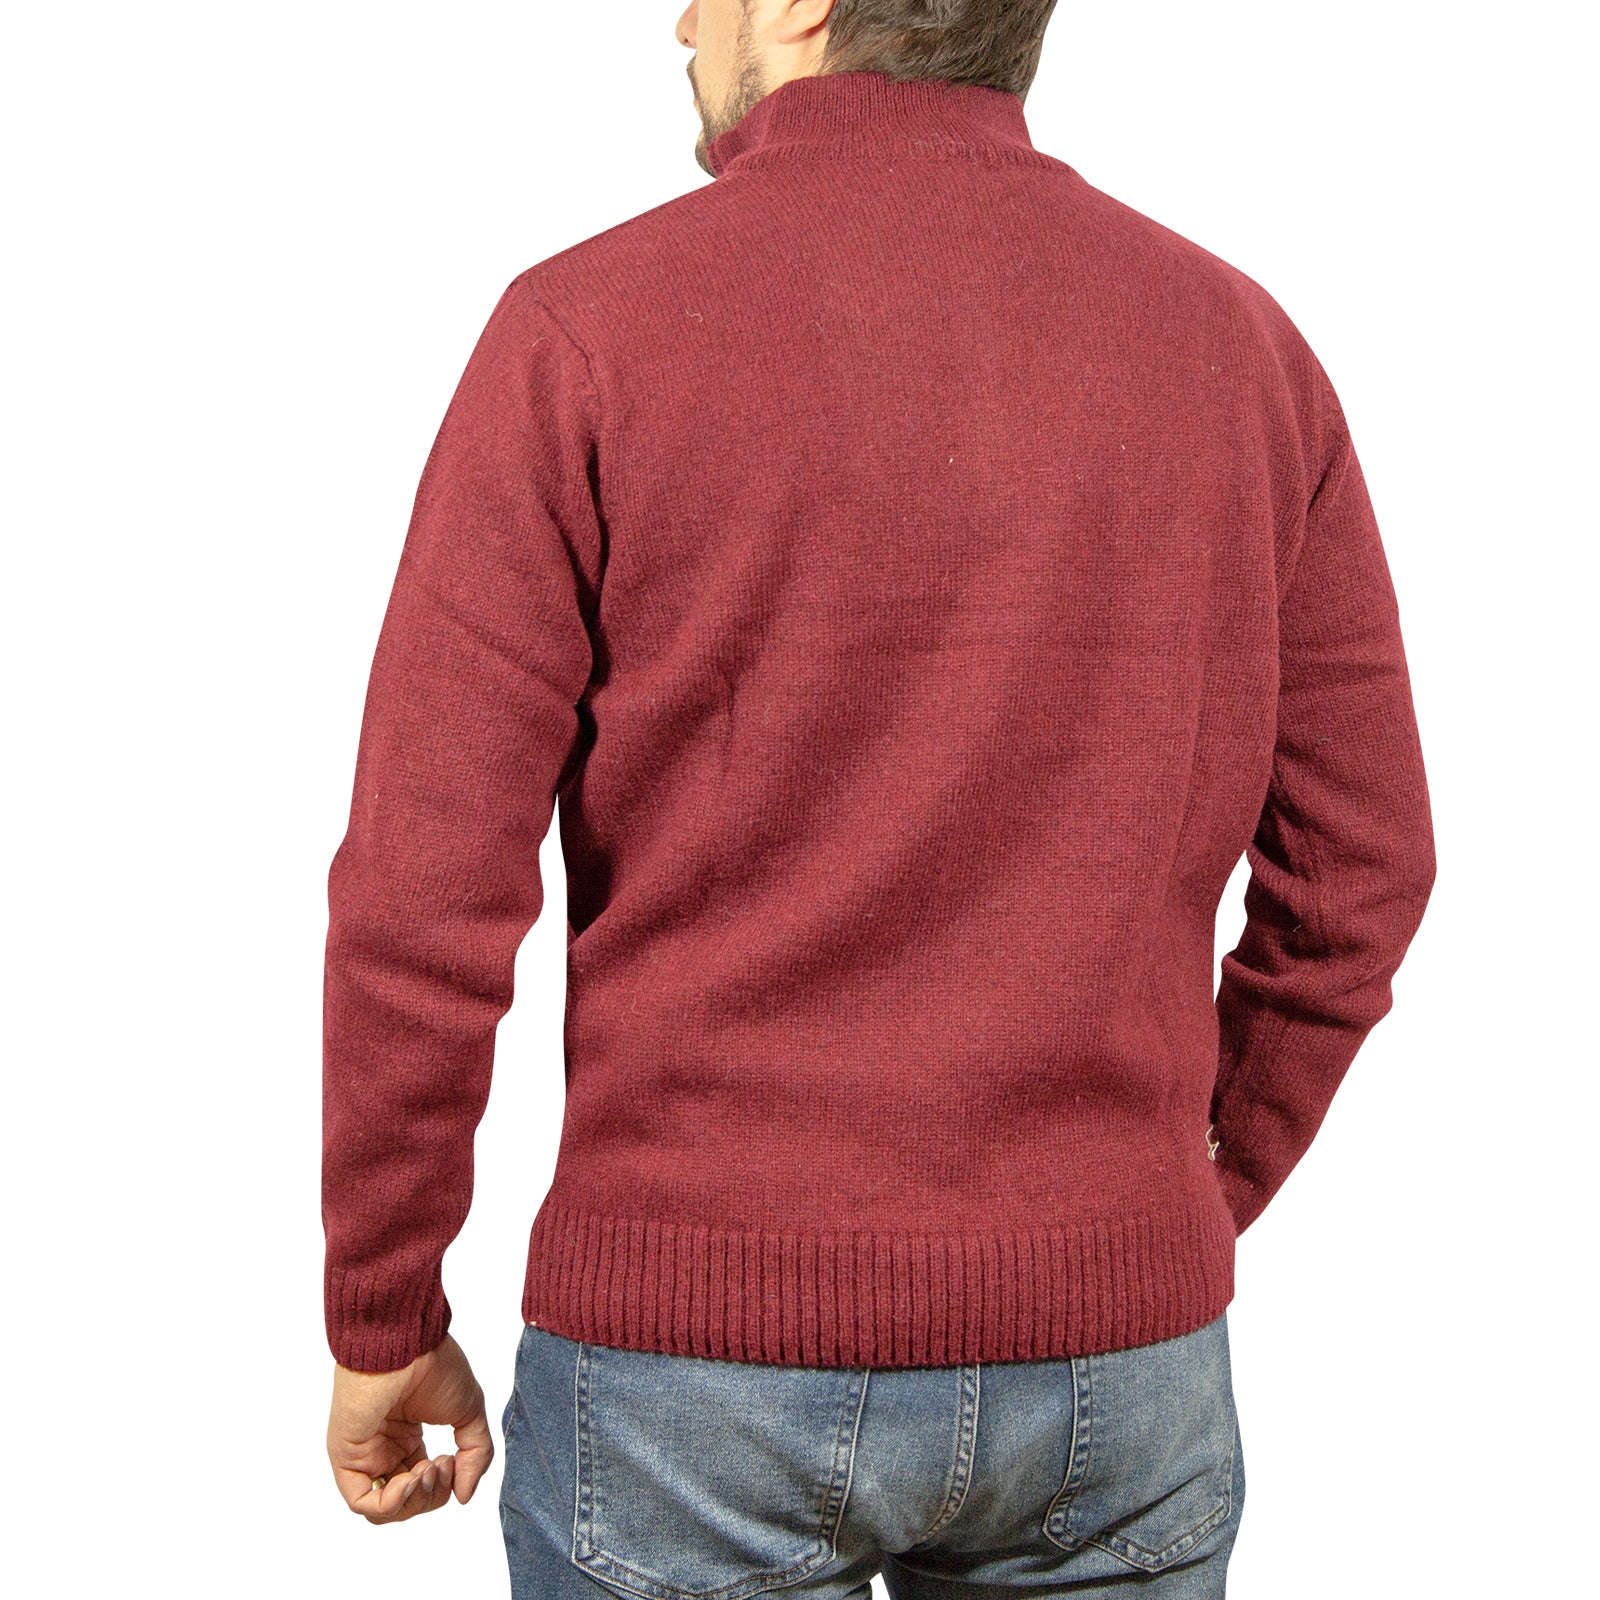 100% SHETLAND WOOL Half Zip Up Knit JUMPER Pullover Mens Sweater Knitted - Burgundy (97) - XL